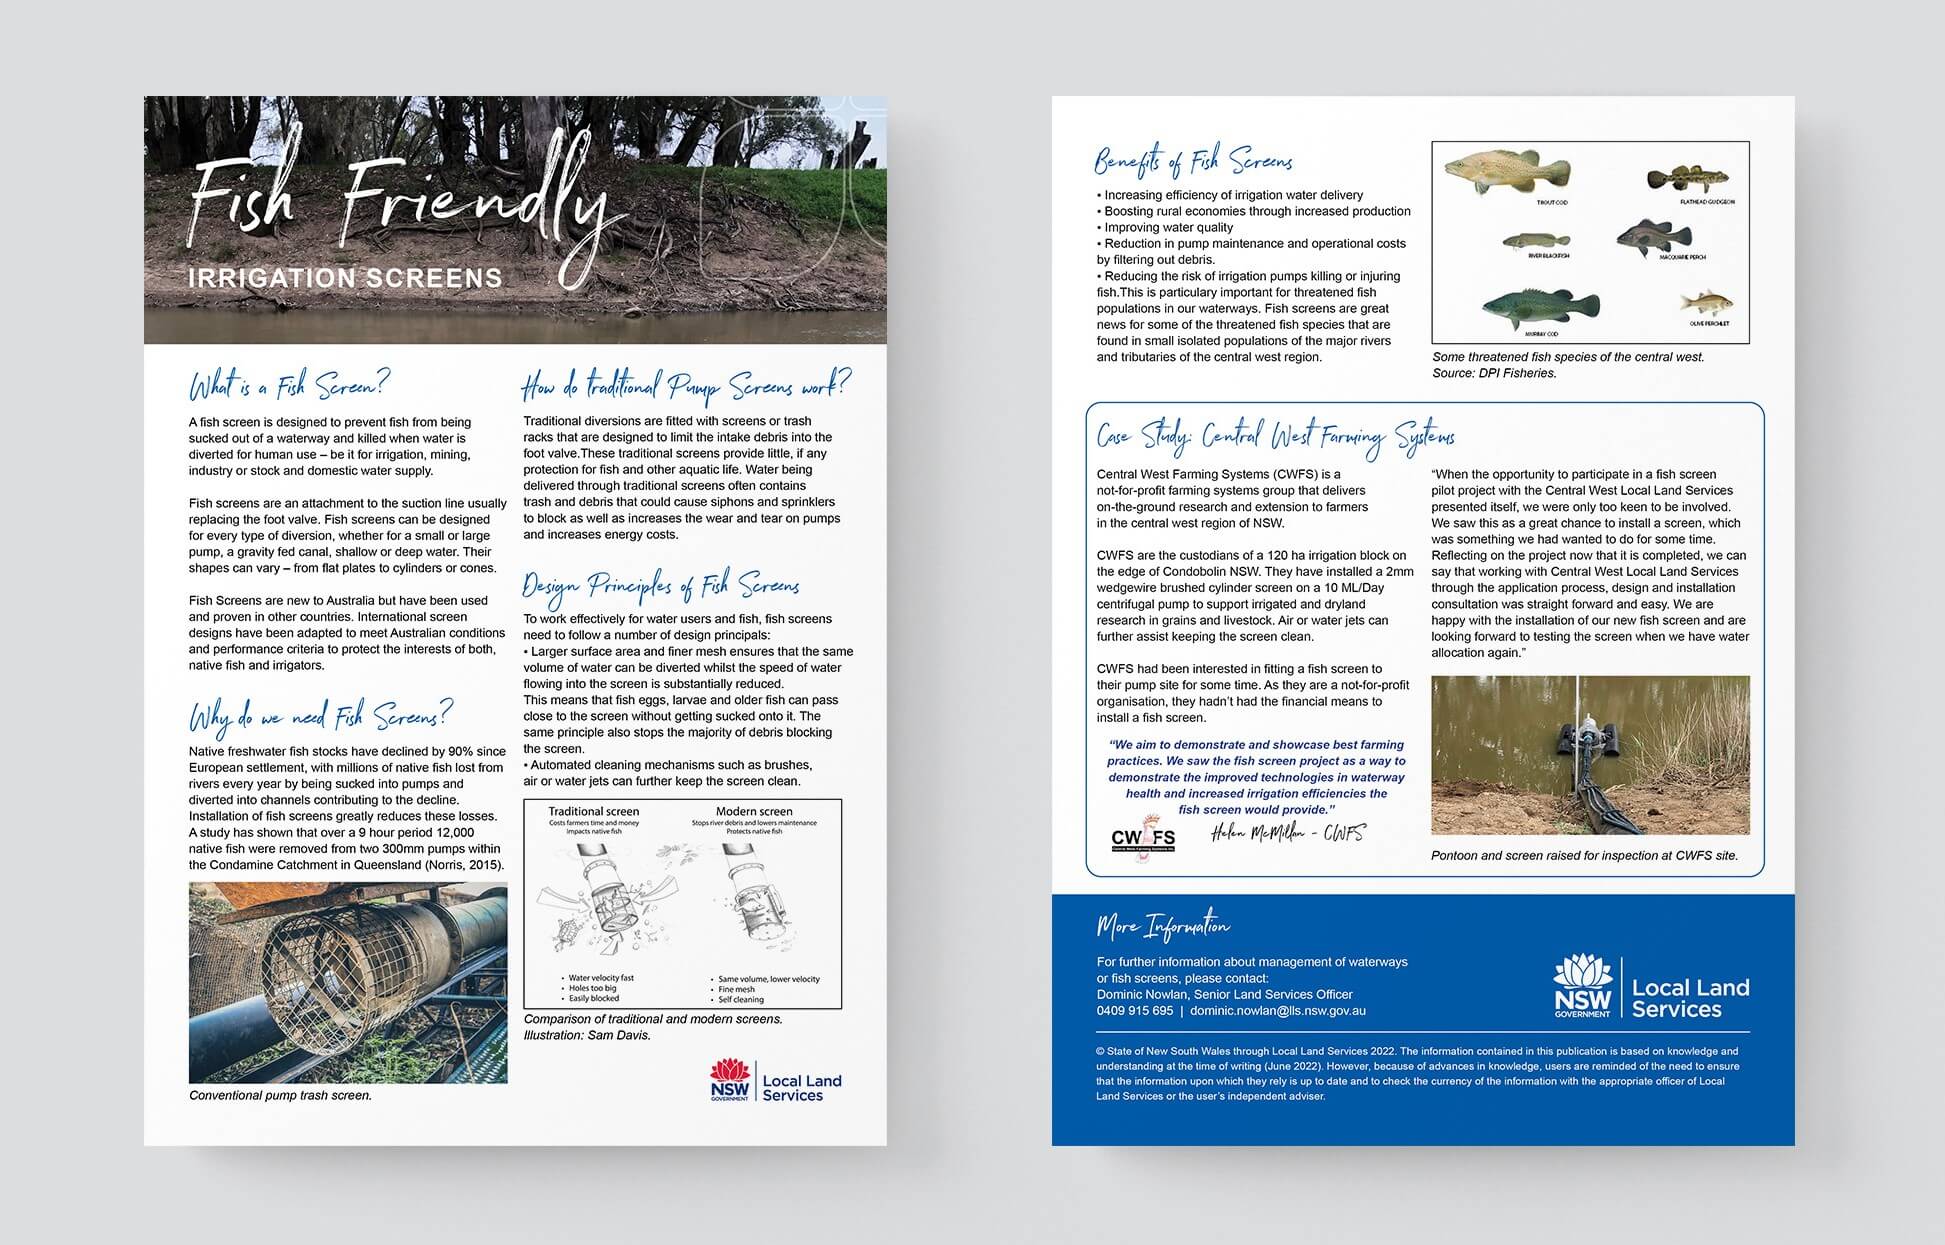 Custom Landcare NRM Graphic Design Ag Sectors CWLLS Fish Friendly Irrigation Screens Fact Sheet 2